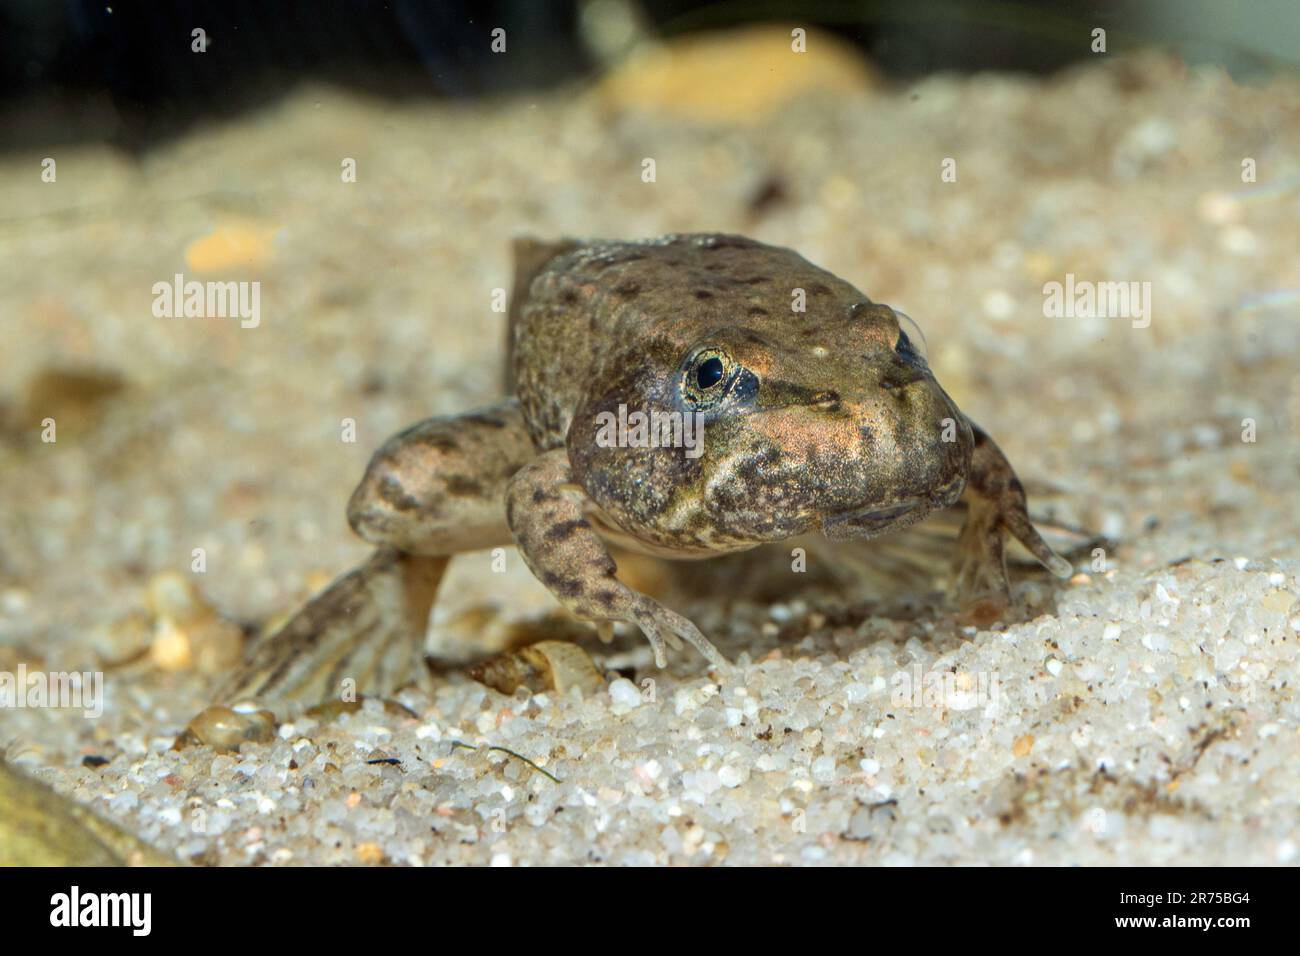 marsh frog, lake frog (Rana ridibunda, Pelophylax ridibundus), tadpole nearing completion of metamorphosis, frontal view, Germany Stock Photo